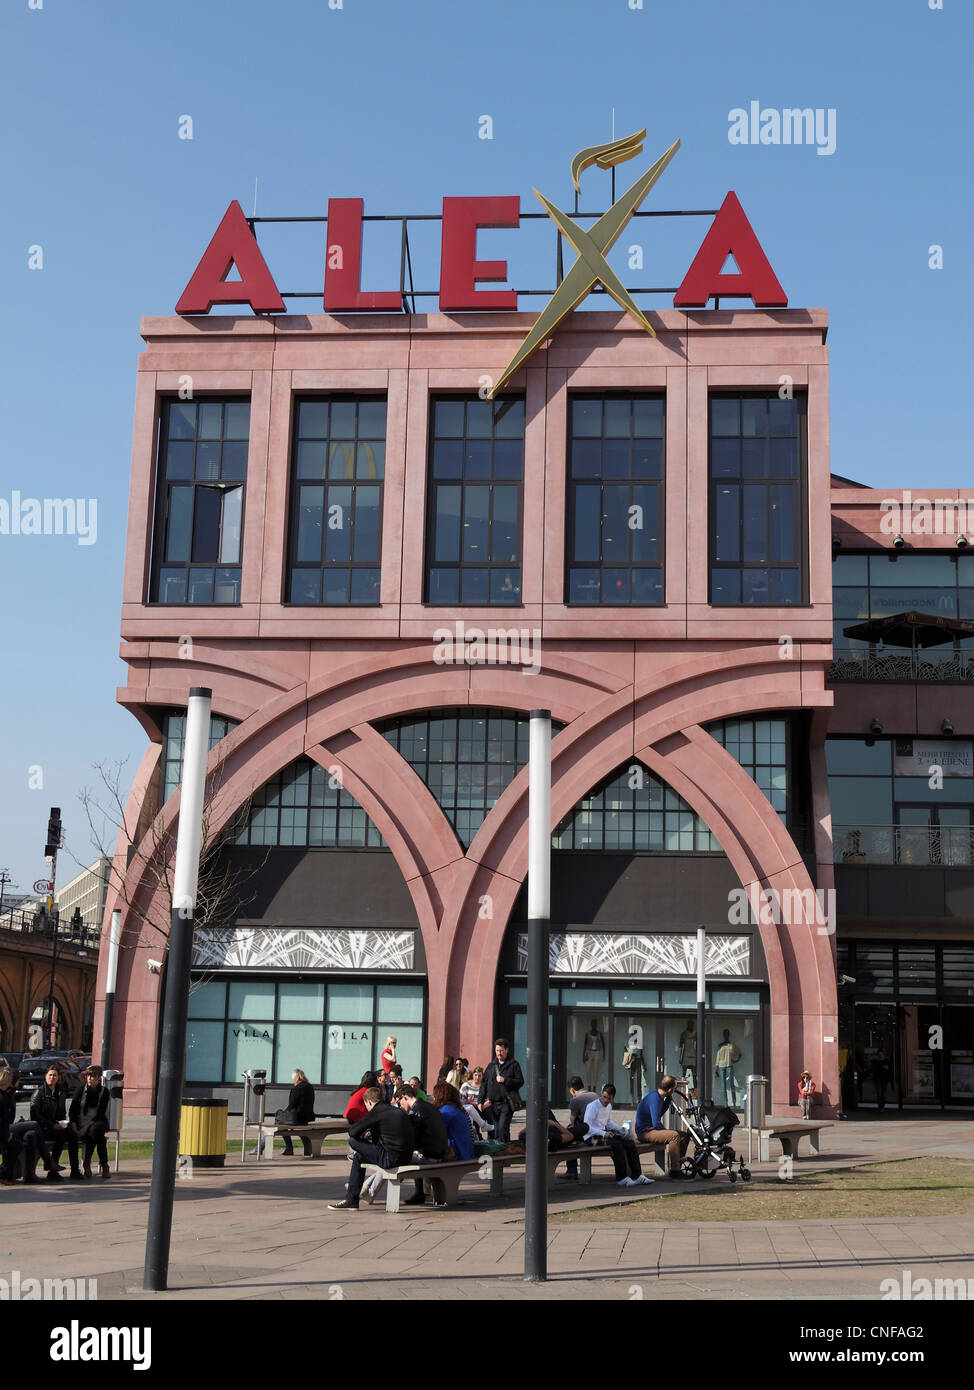 The Alexa shopping centre, Alexanderplatz, Berlin, Germany Stock Photo -  Alamy